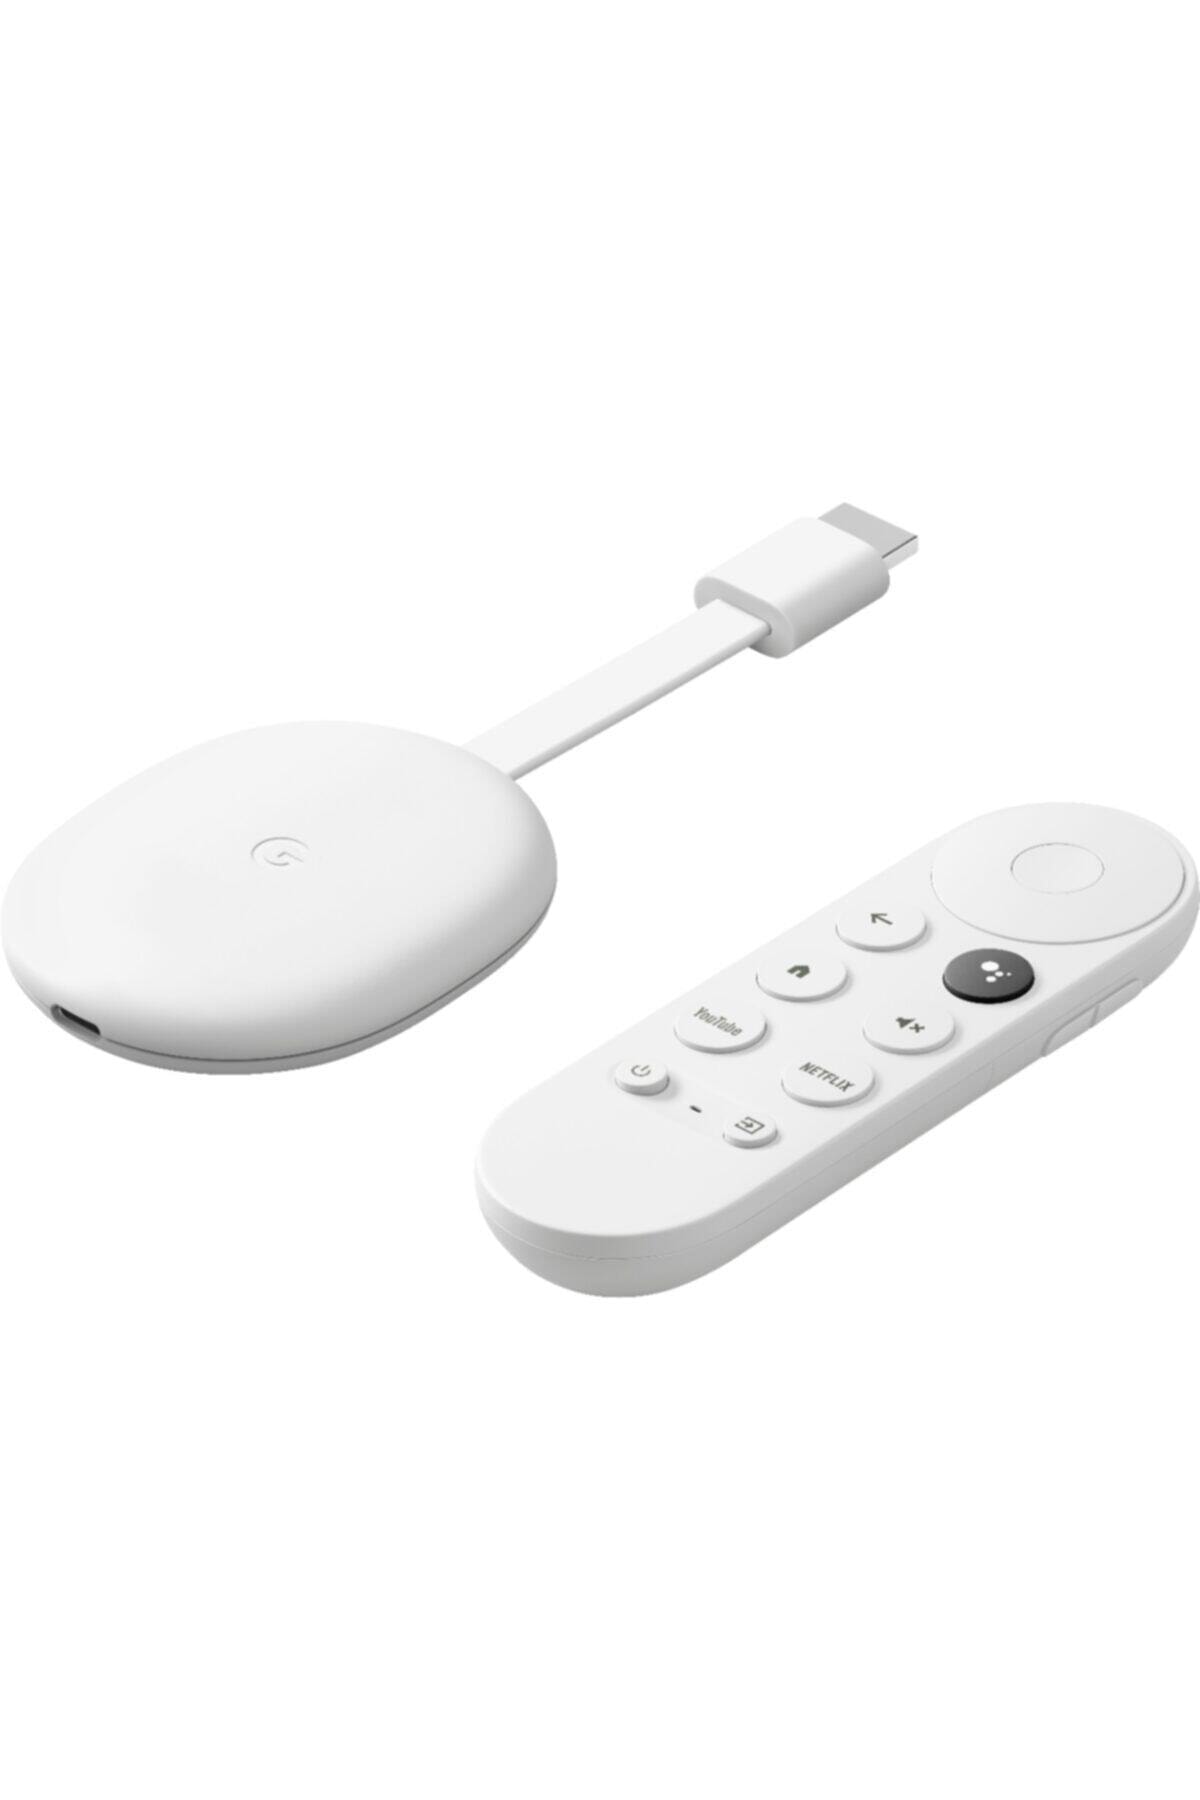 Chromecast ve Google TV Kumanda